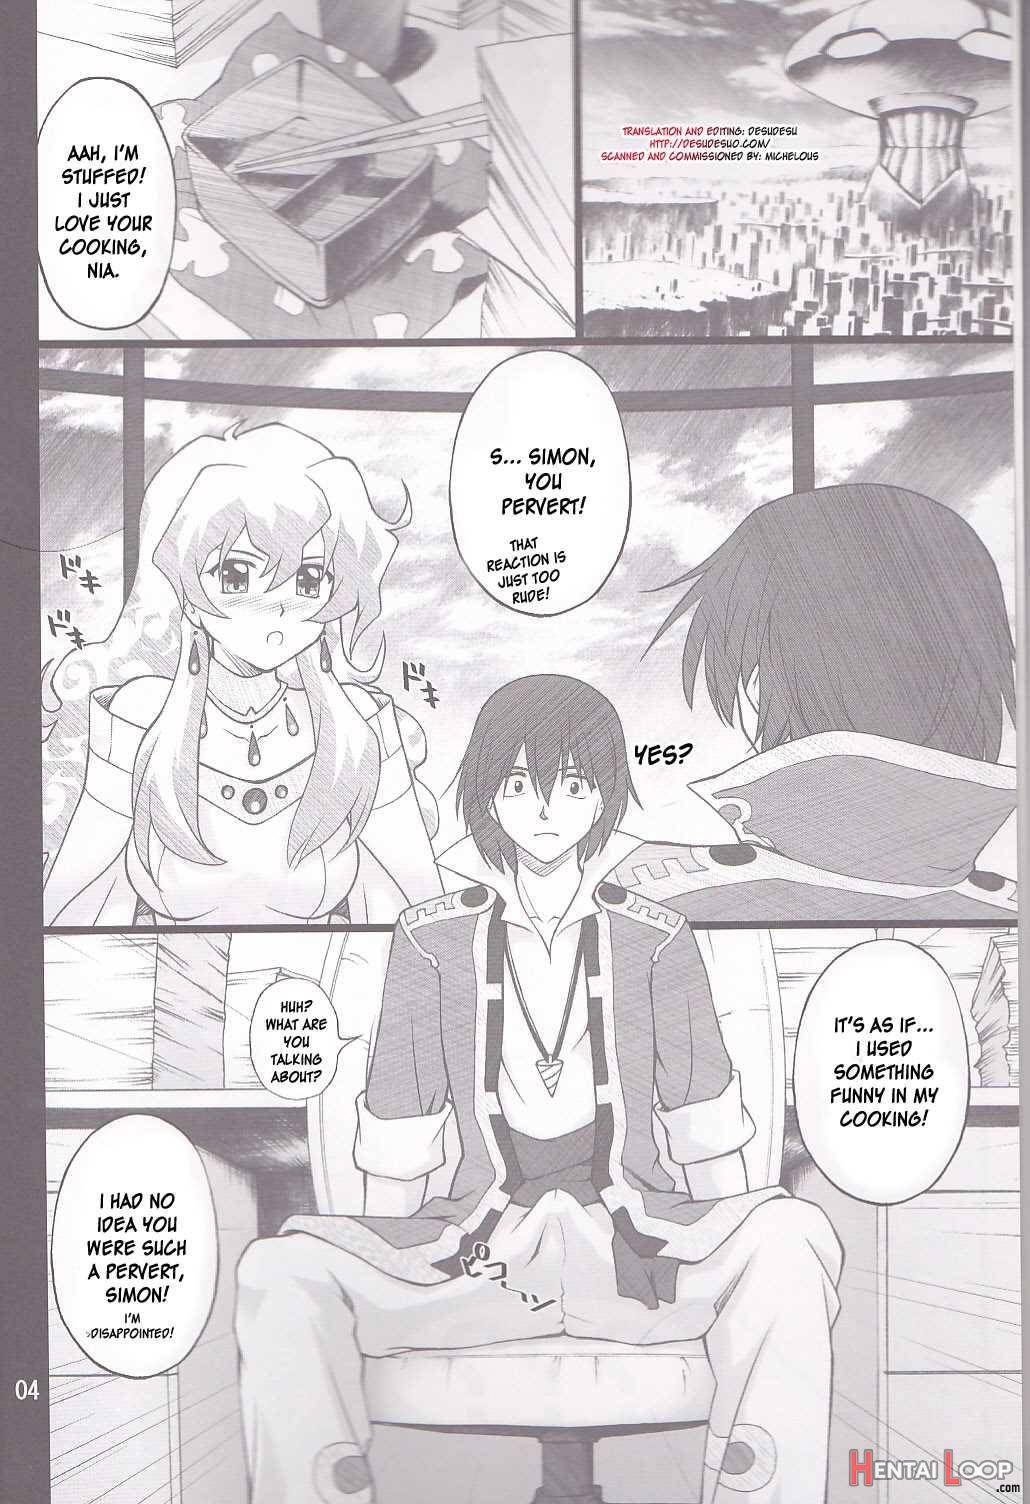 Oikari Nia-chan page 3